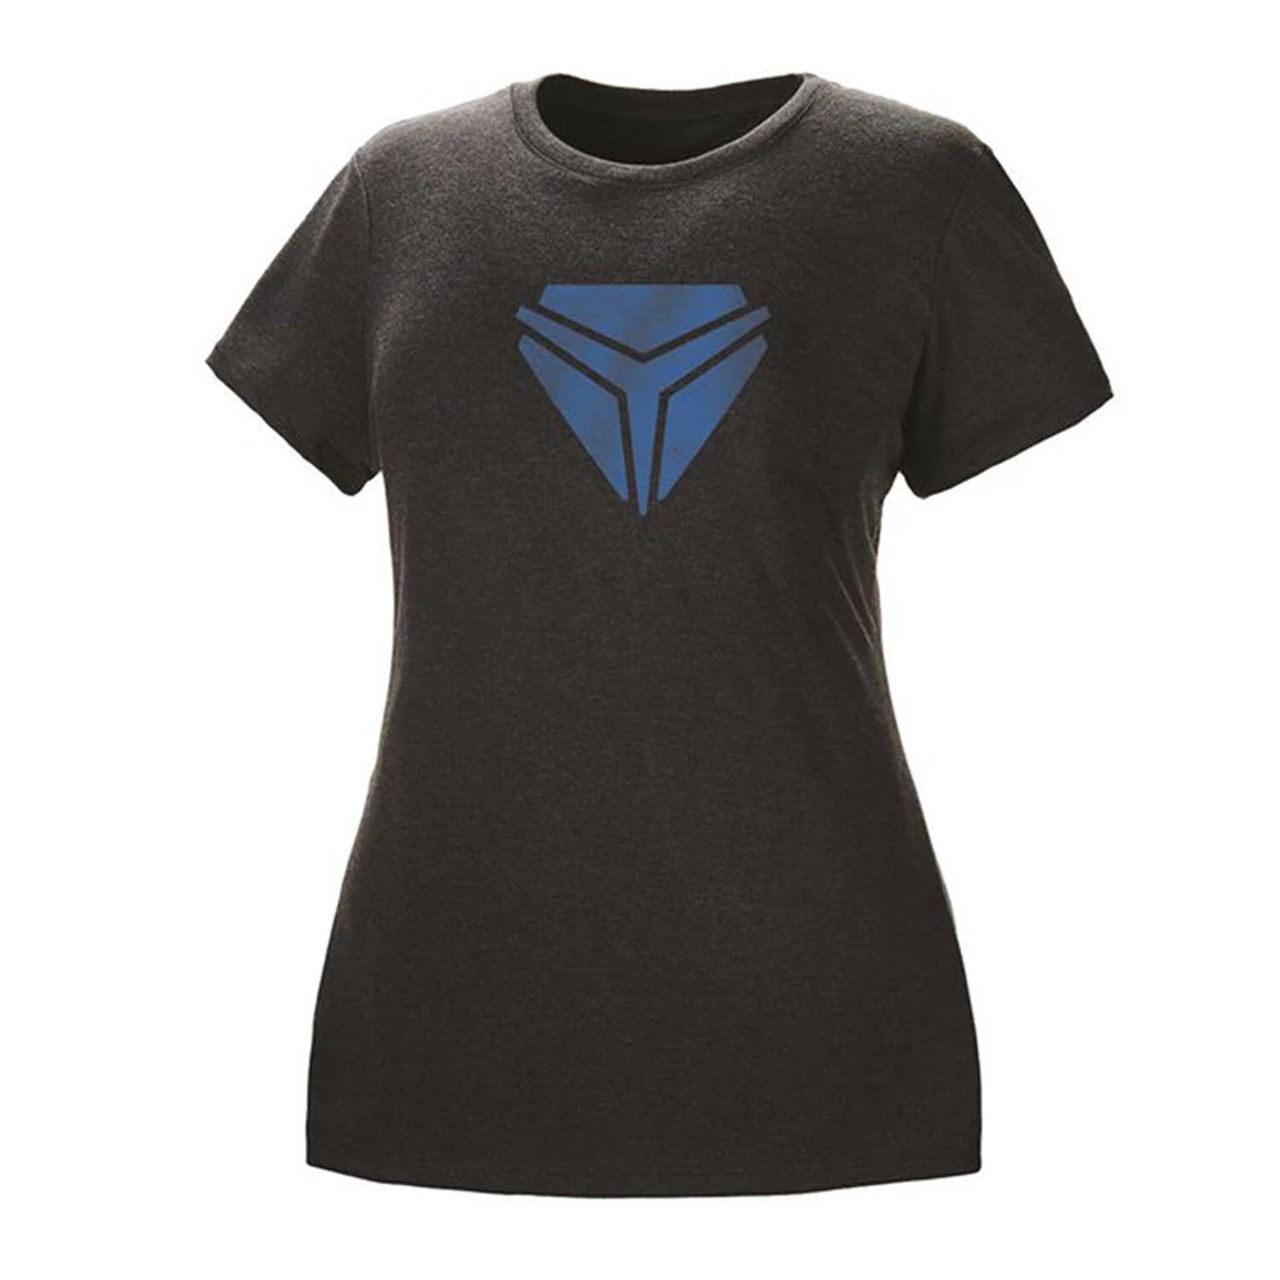 Polaris New OEM Women’s Vintage Graphic T-Shirt with Slingshot Shield, 286791412